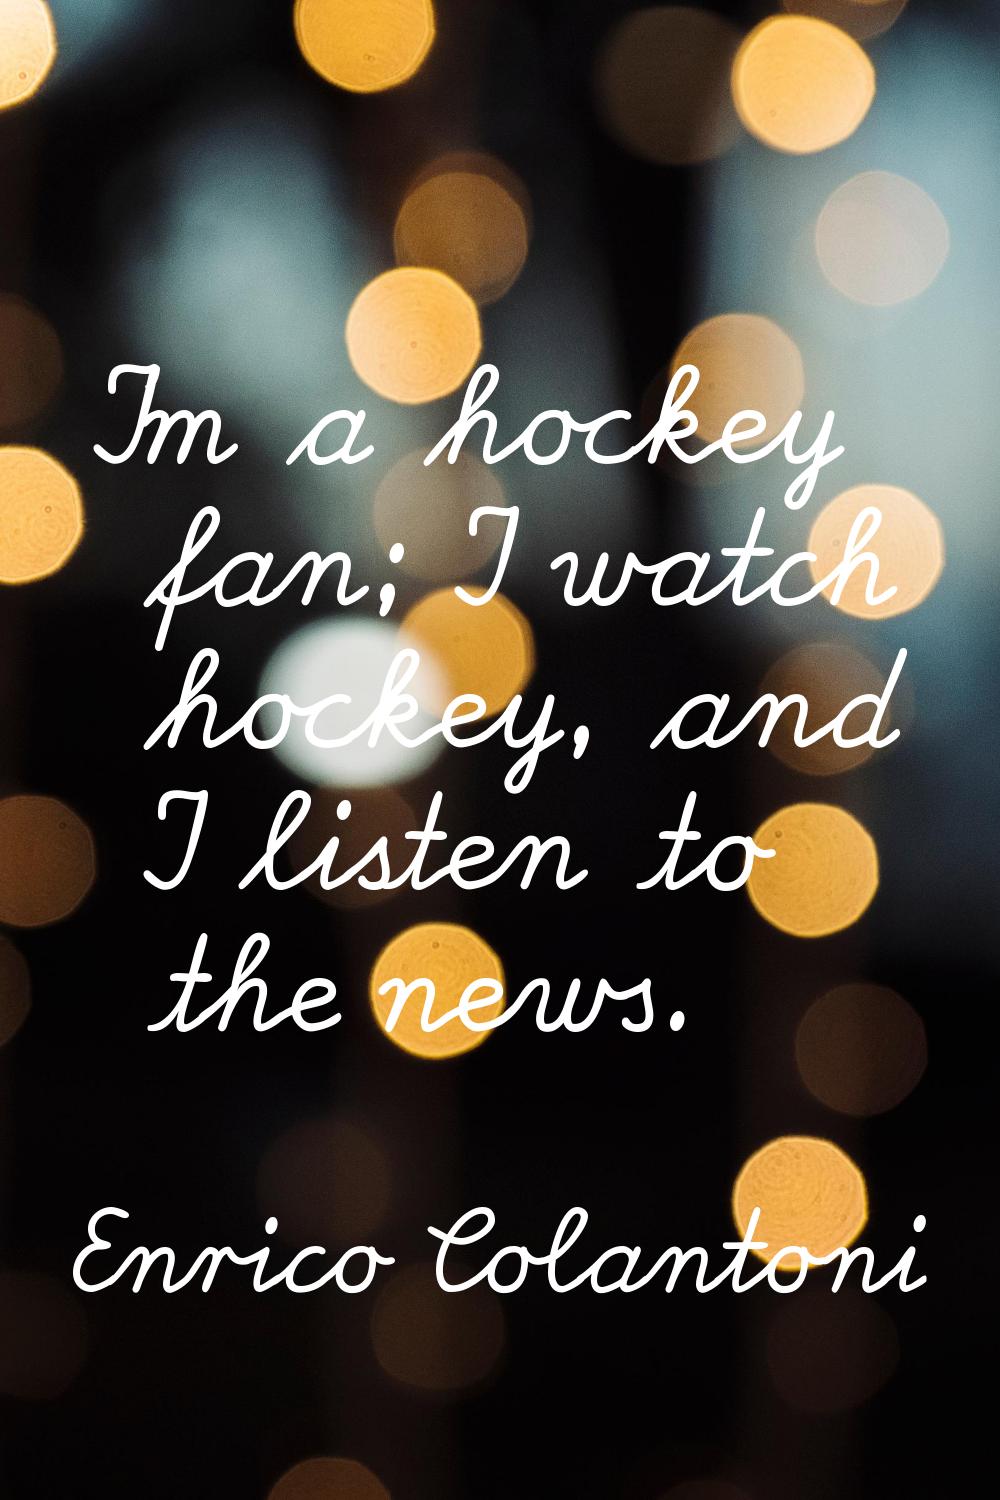 I'm a hockey fan; I watch hockey, and I listen to the news.